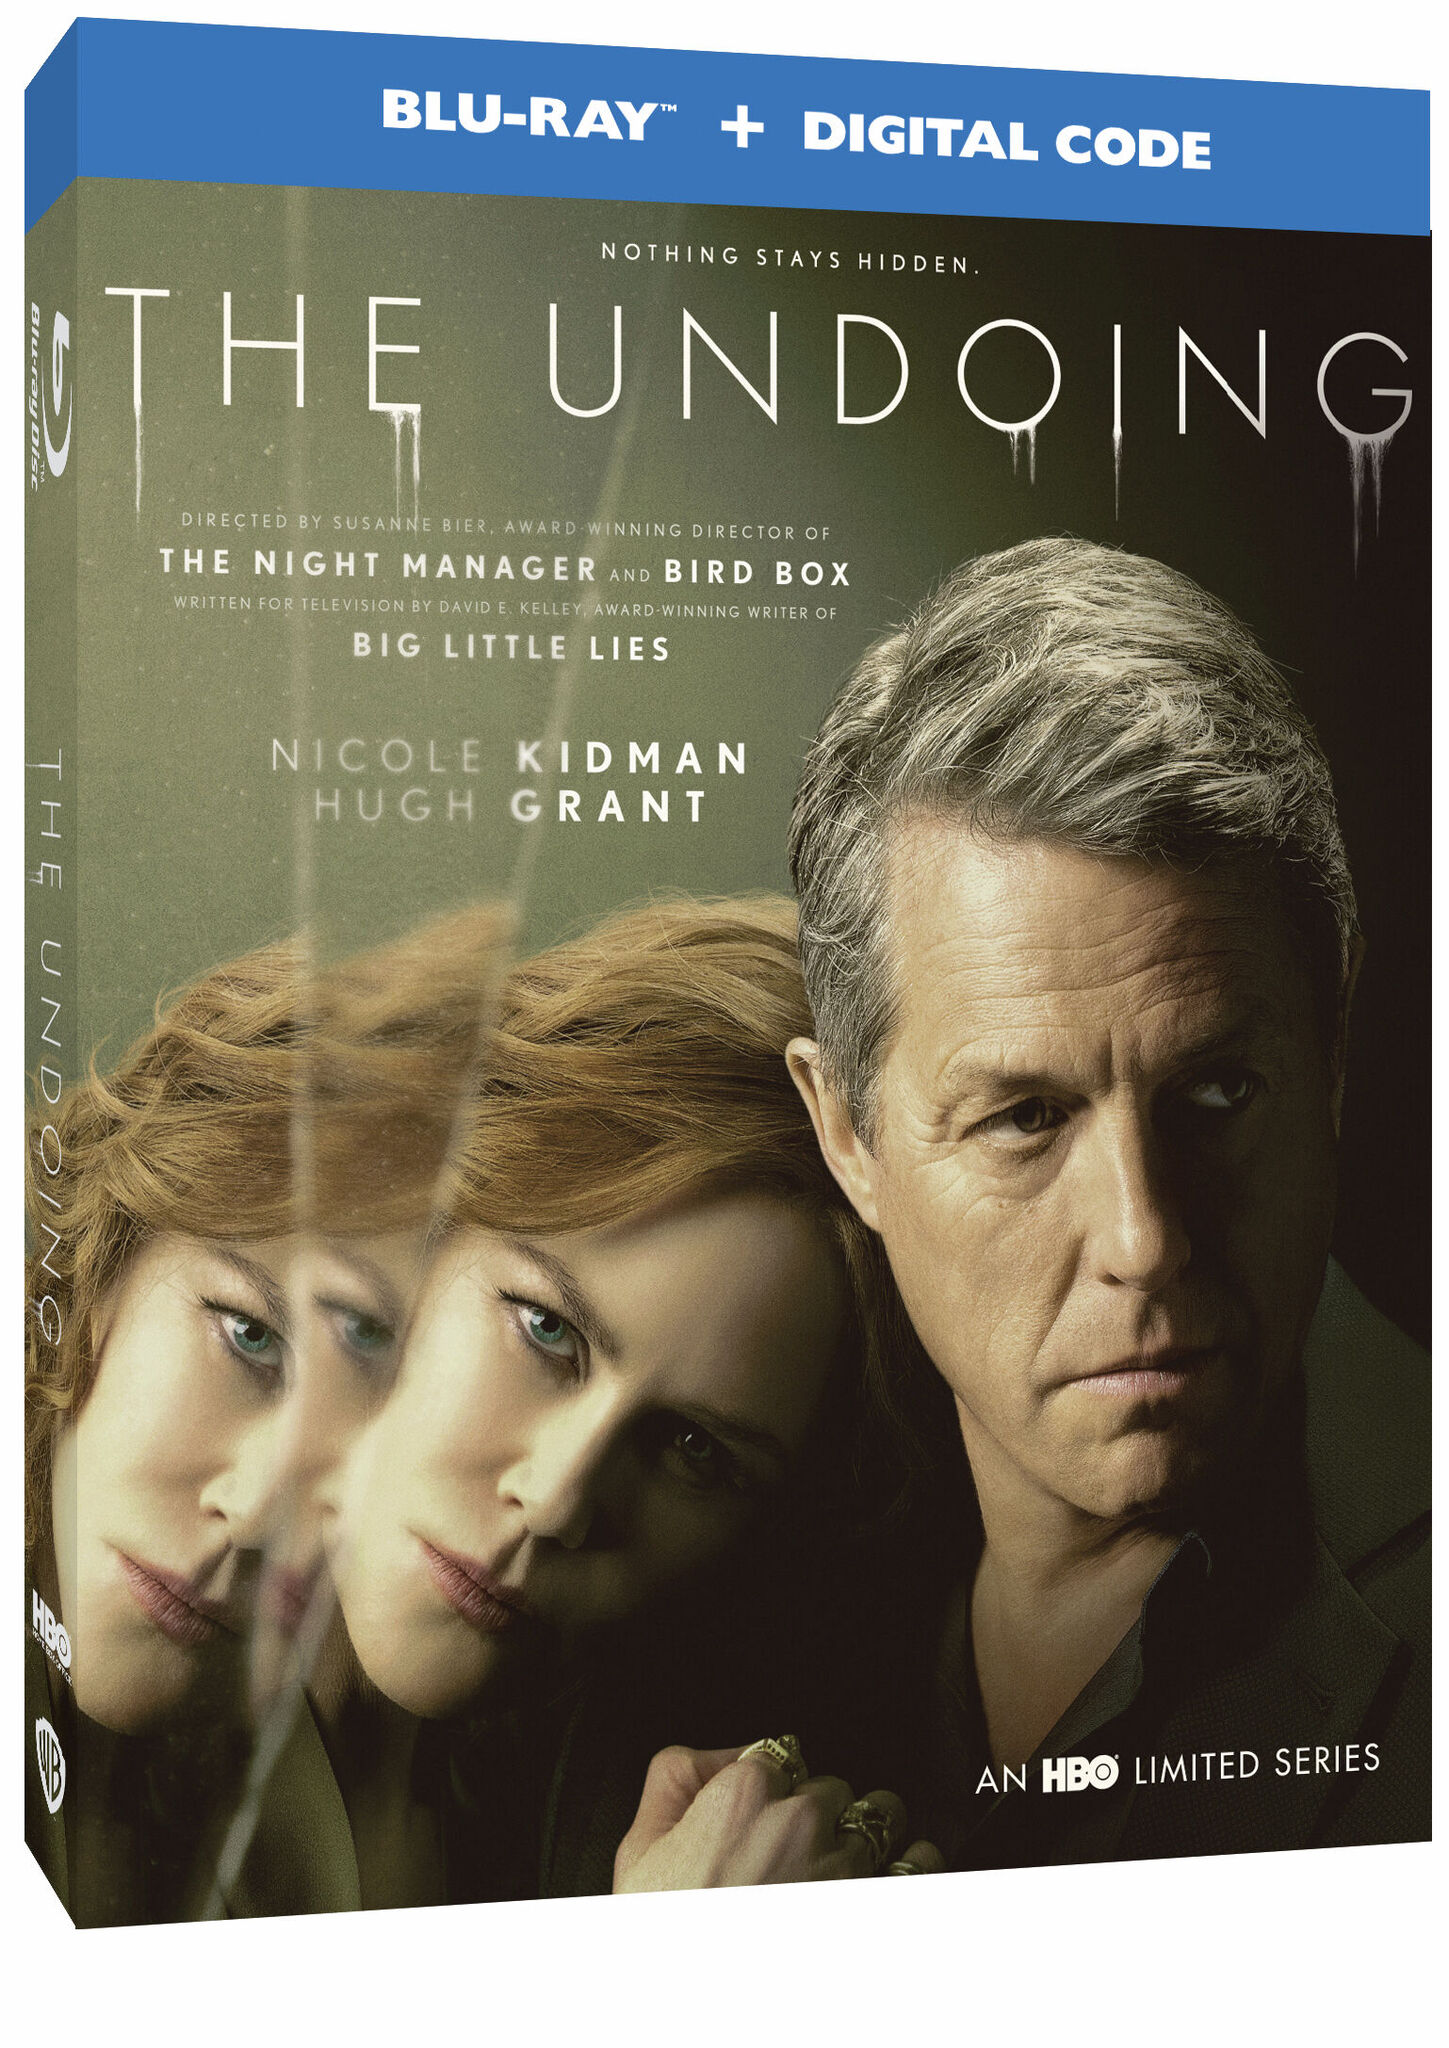 THE UNDOING Trailer # 2 (NEW 2020) Nicole Kidman, Hugh Grant, TV Series 